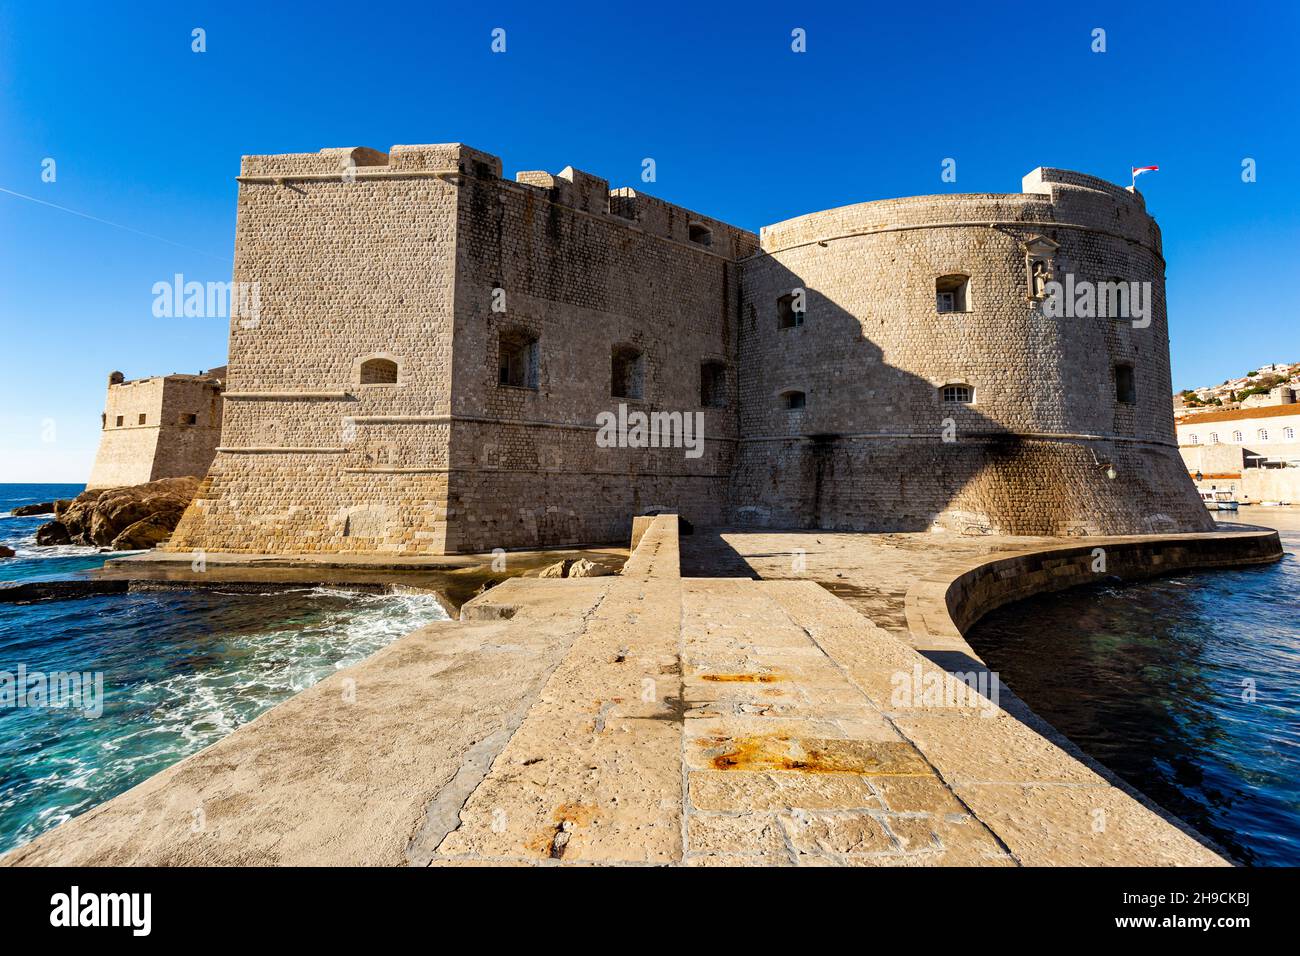 View of the Fort St. John. Dubrovnik. Croatia. Stock Photo